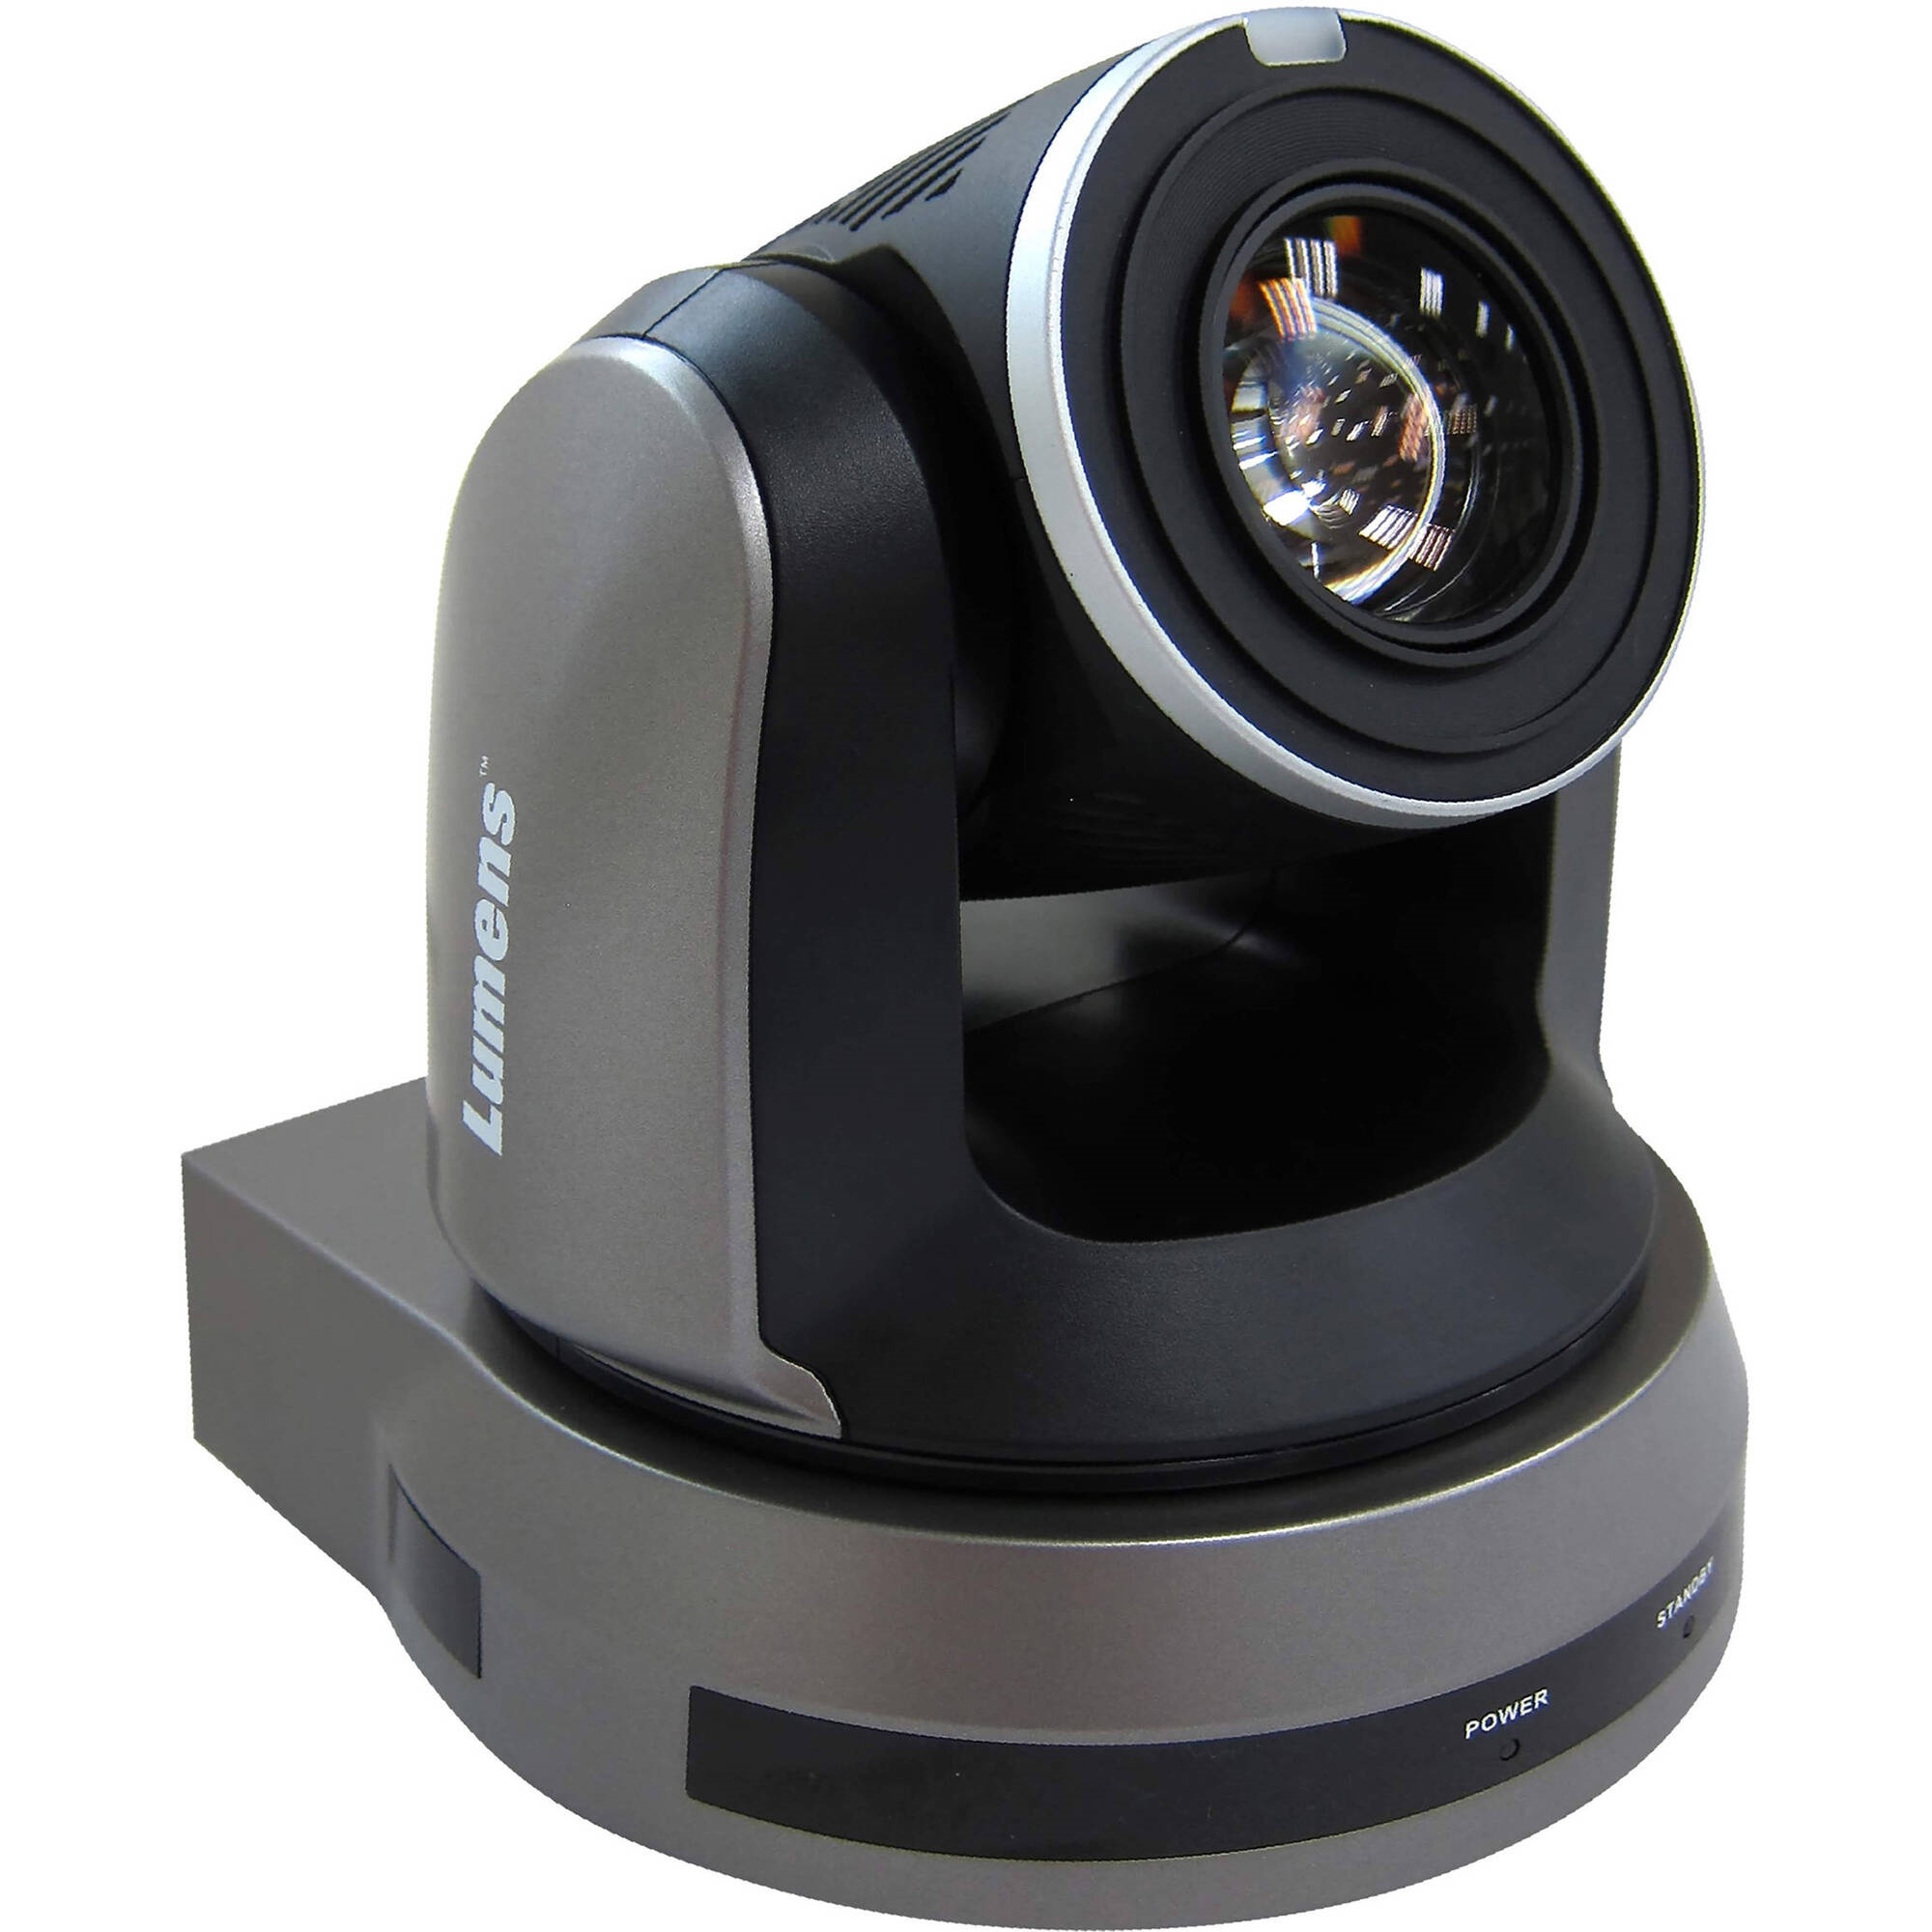 Lumens VC-A61P 4K IP PTZ Video Camera with 30x Optical Zoom (Black)